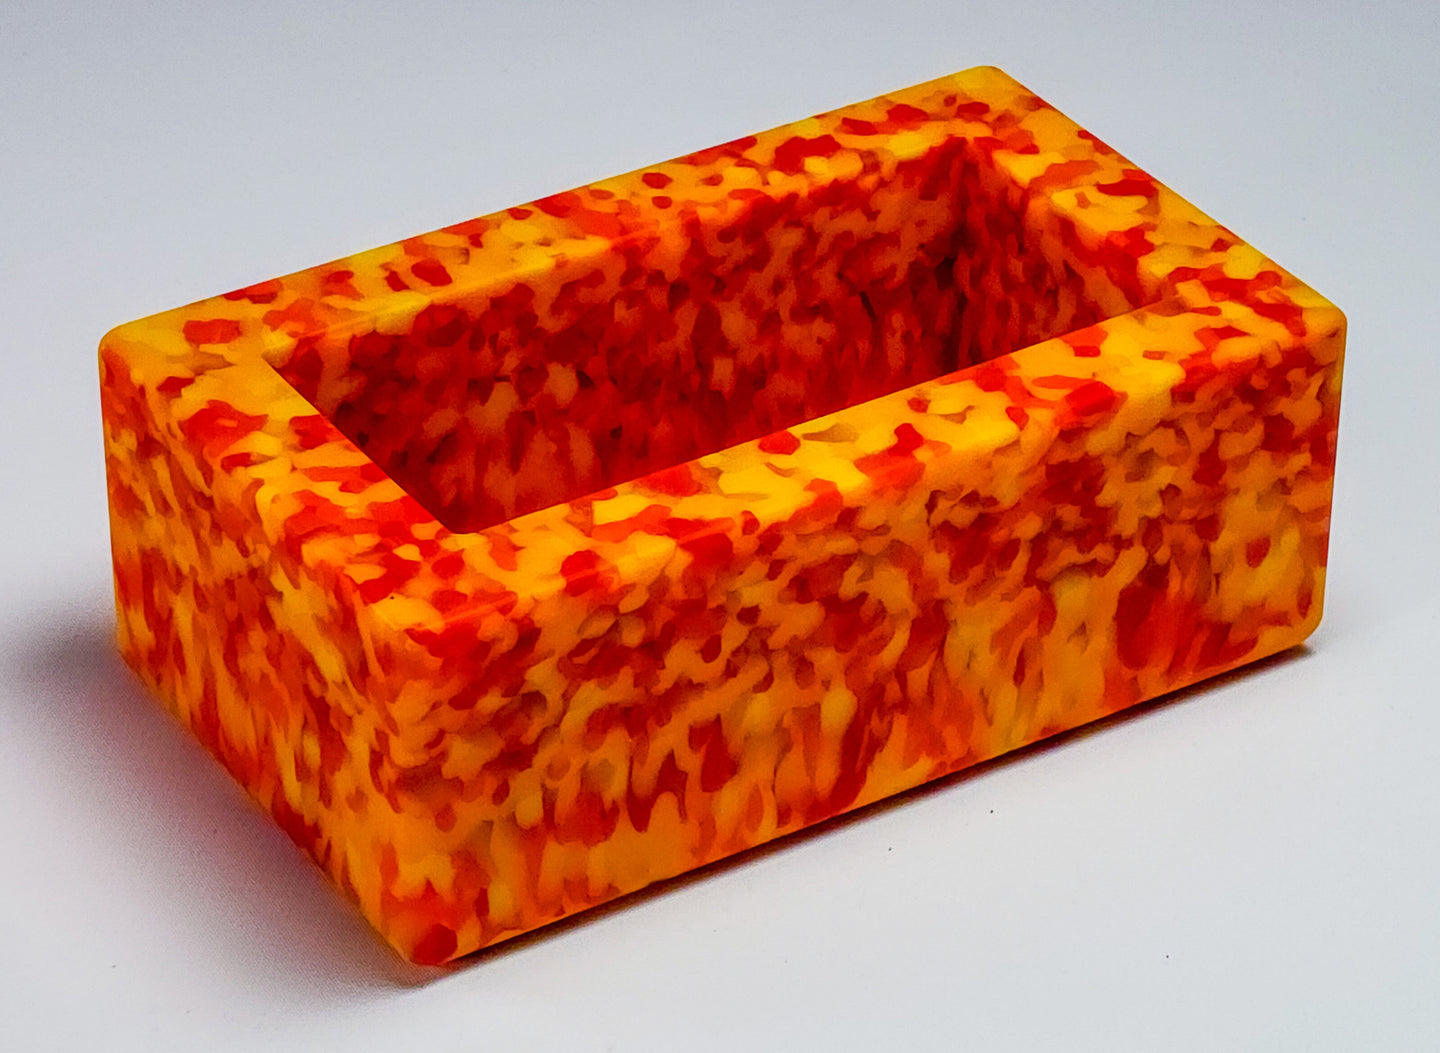 57. Big Yellowish- Orange Box